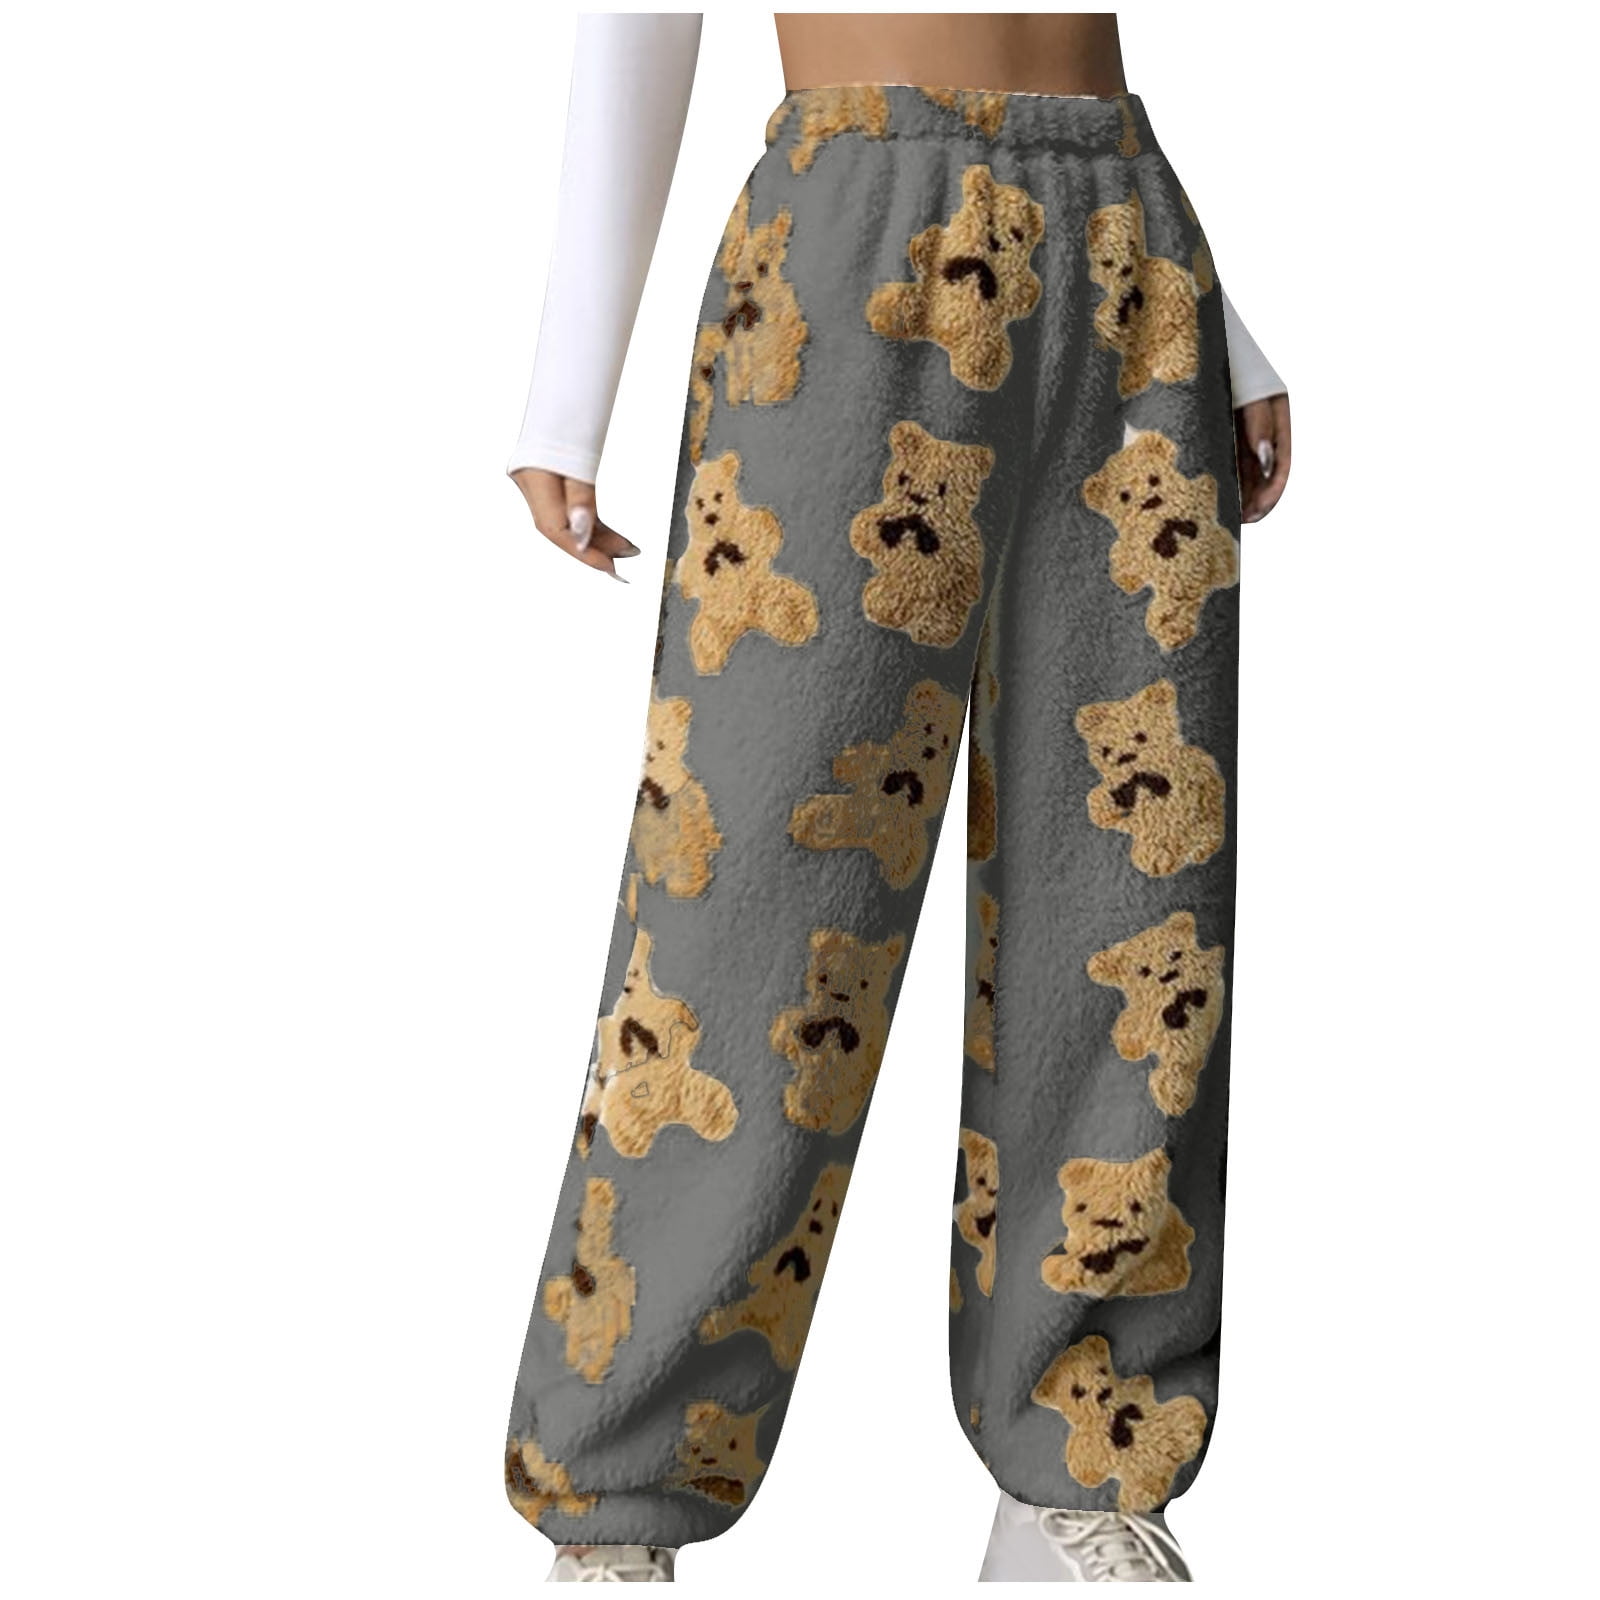 RYRJJ Women's Winter Warm Fleece Pajama Pants Plus Size Cute Bear Print  Baggy Sweatpants Fuzzy Jogger Lounge Pants Sleepwear with Pockets Brown XL